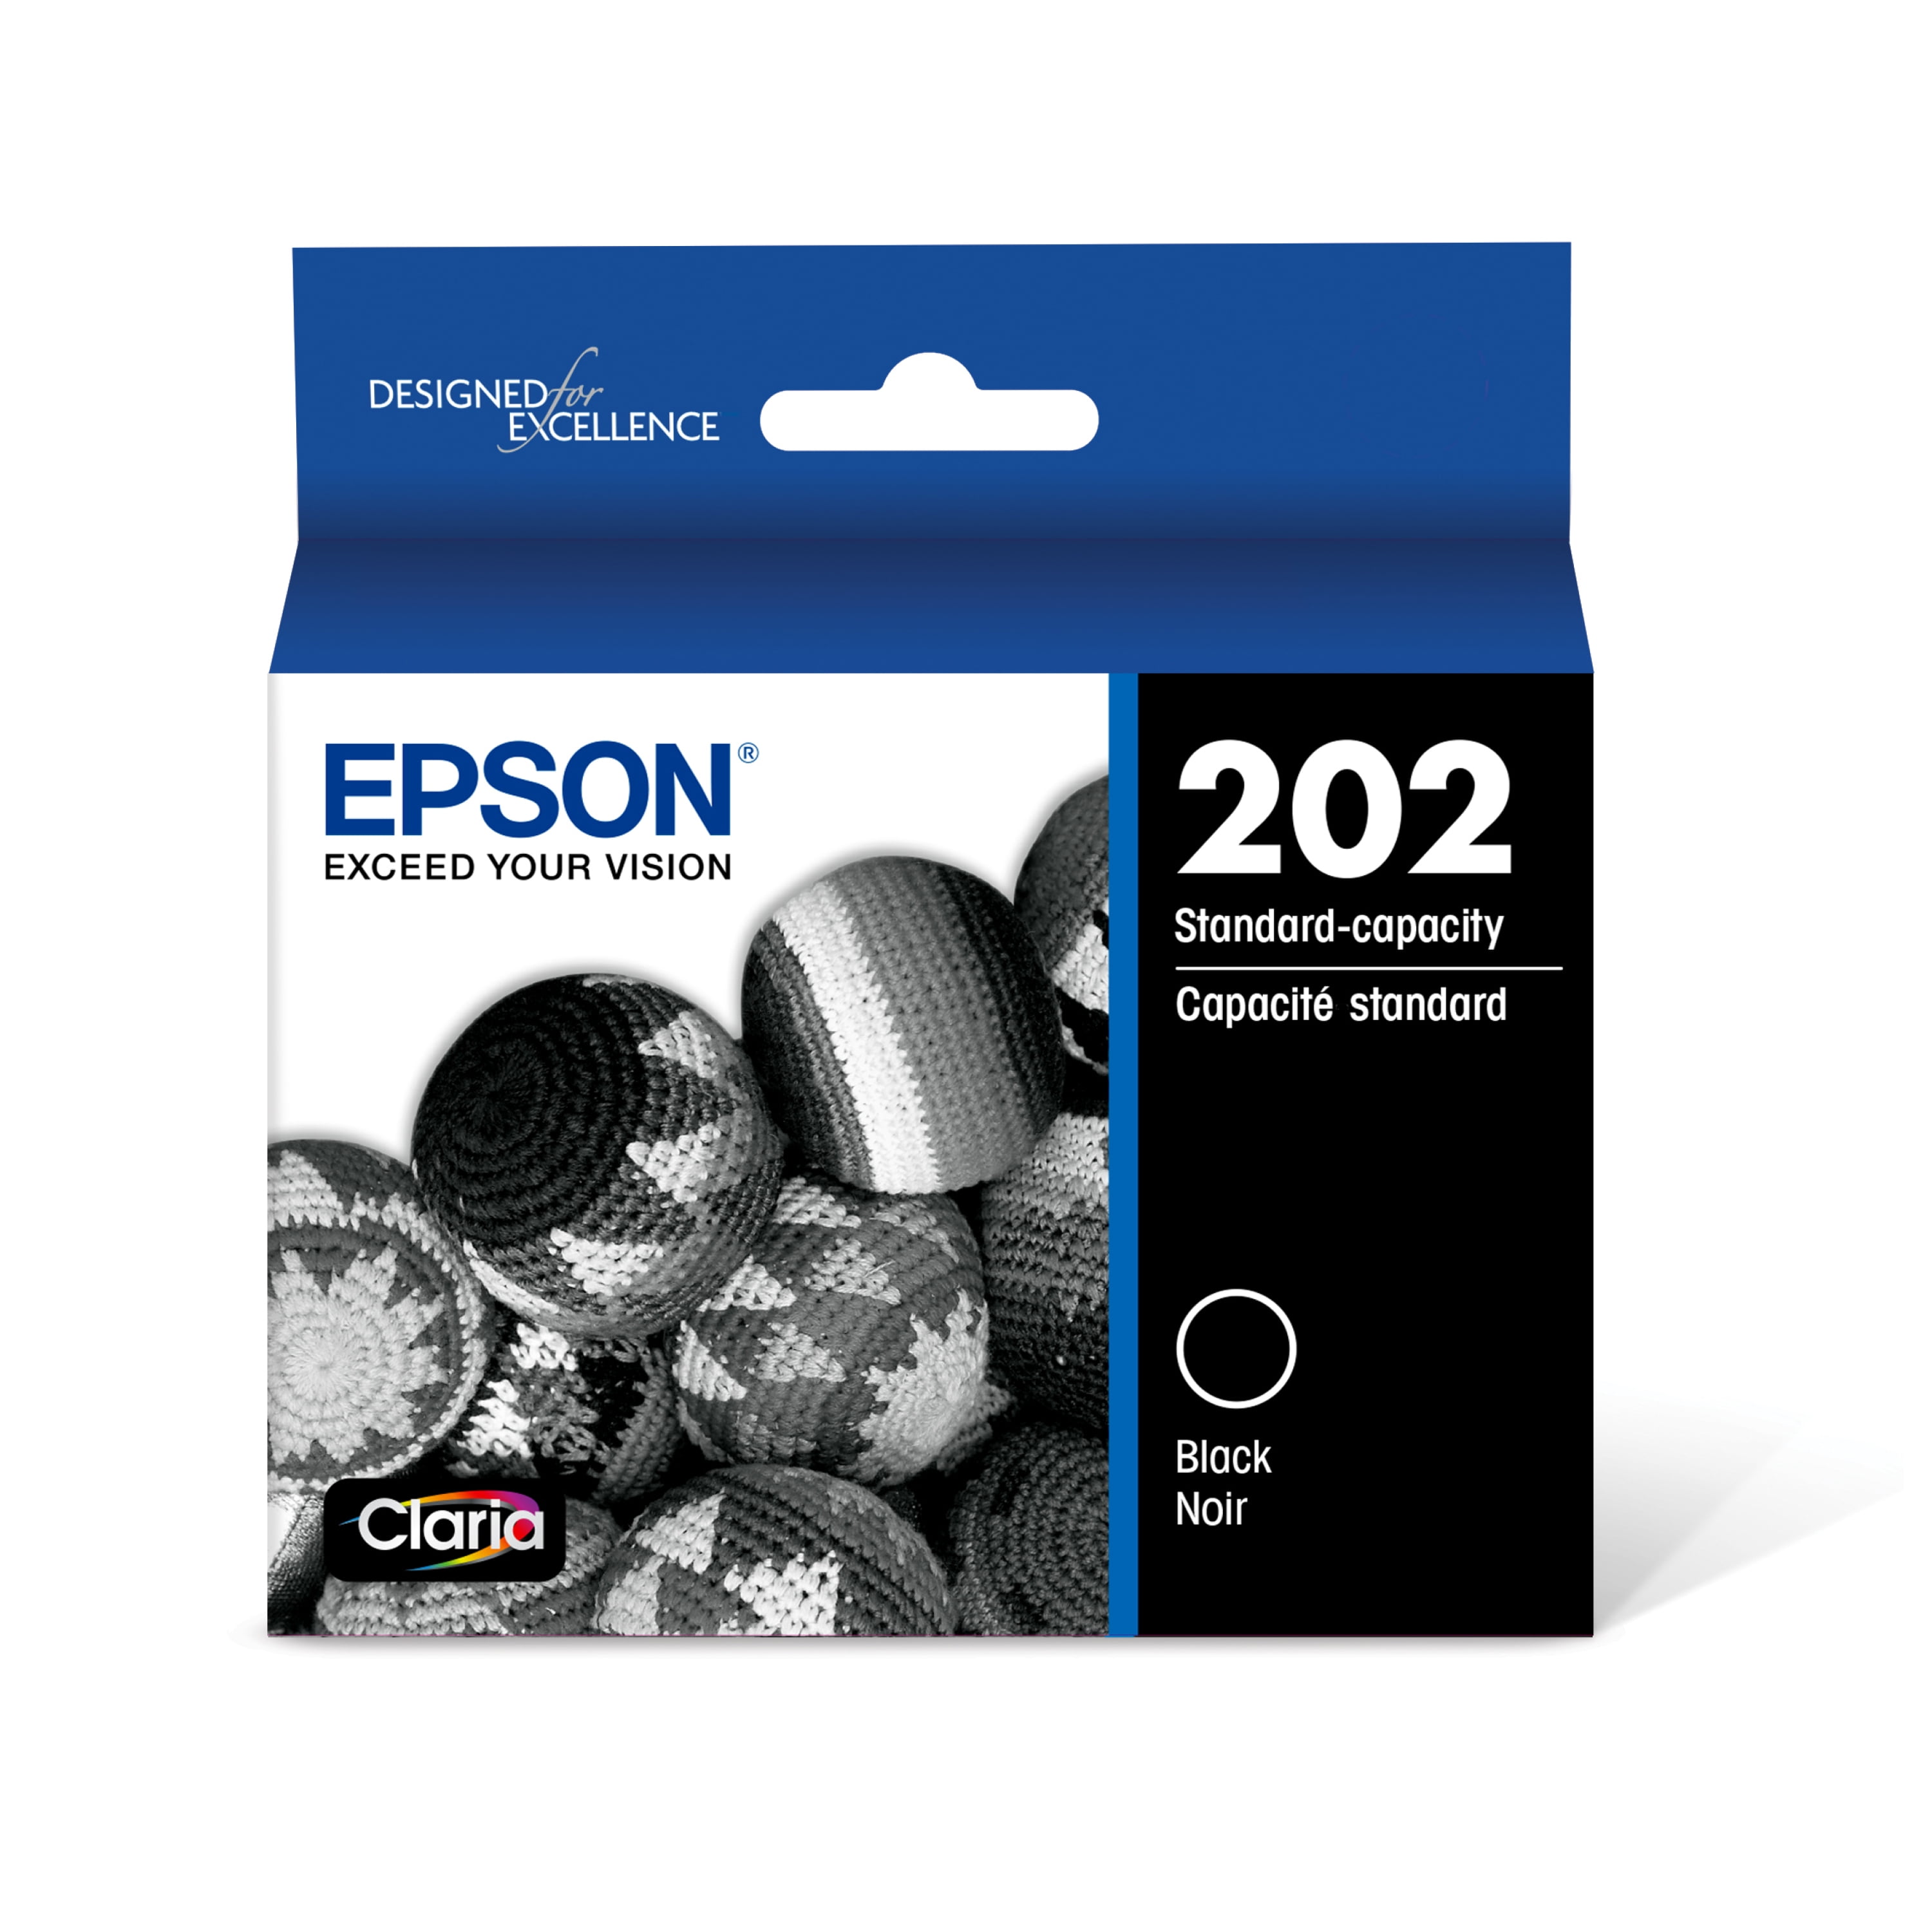 Epson T202 Claria Ink Standard Capacity Black Cartridge - Walmart.com